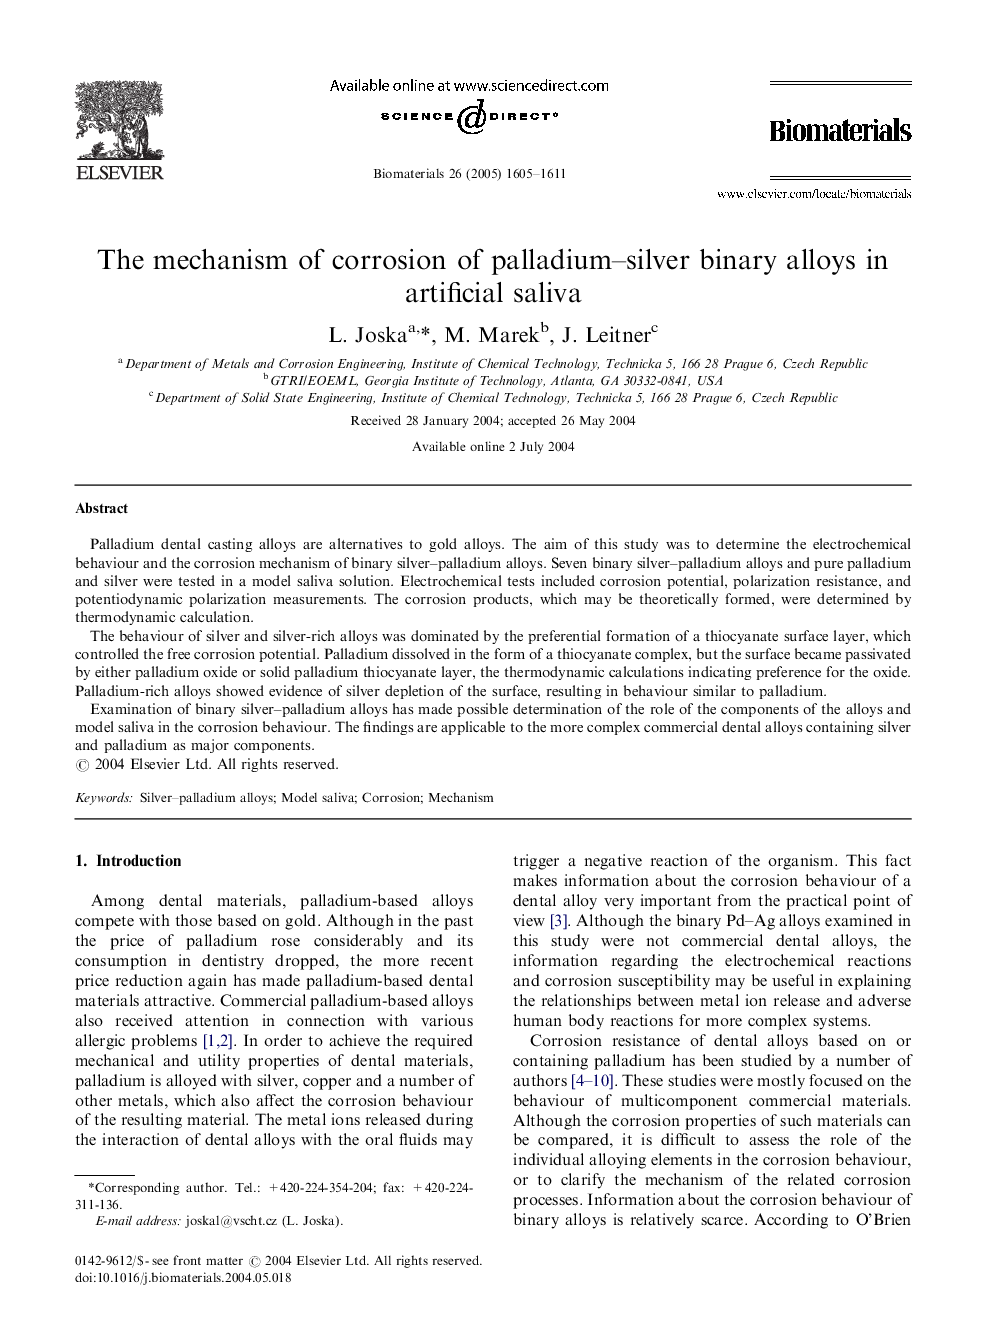 The mechanism of corrosion of palladium–silver binary alloys in artificial saliva